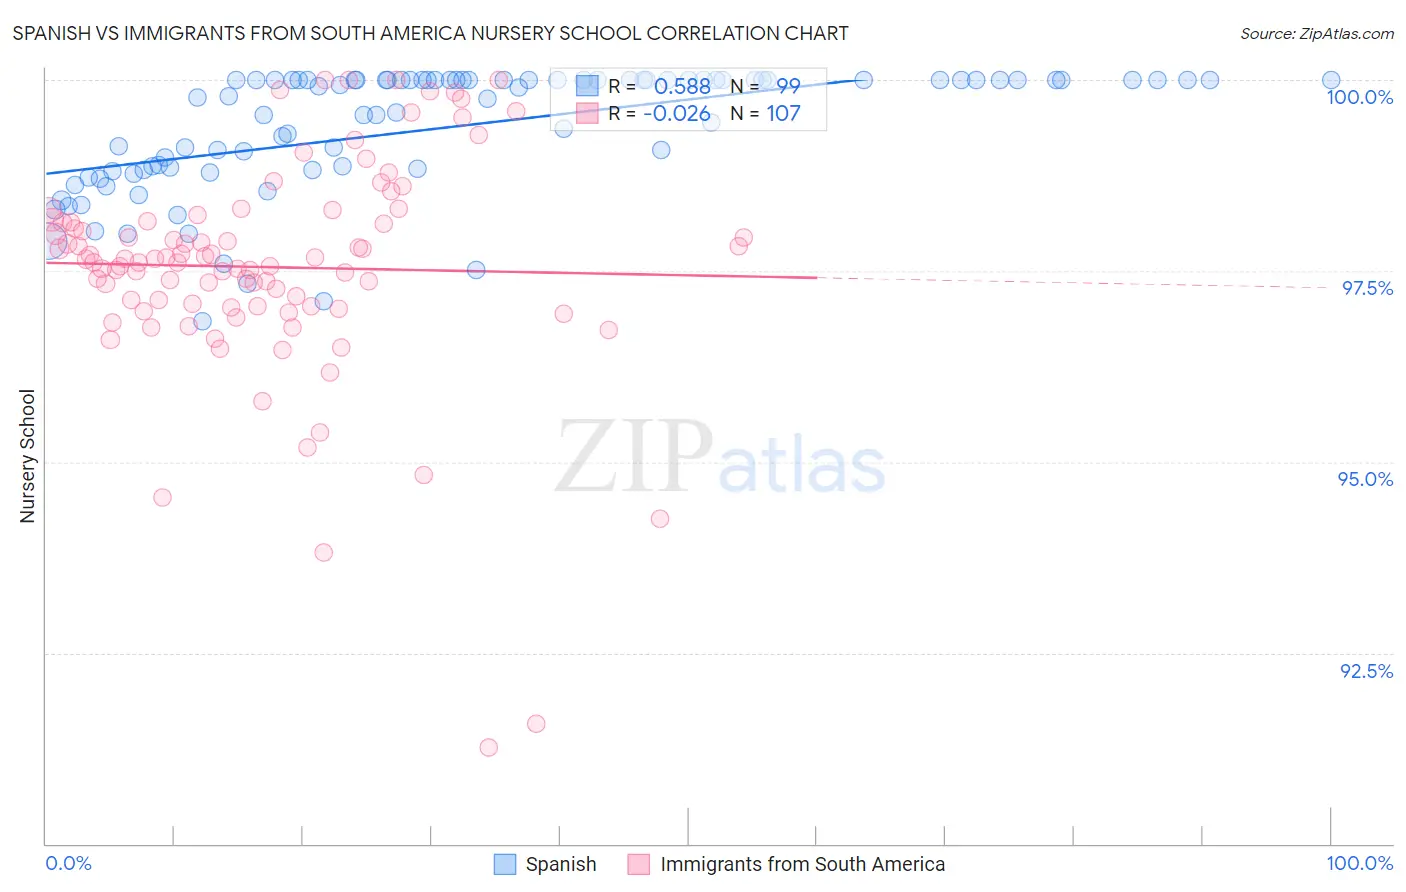 Spanish vs Immigrants from South America Nursery School